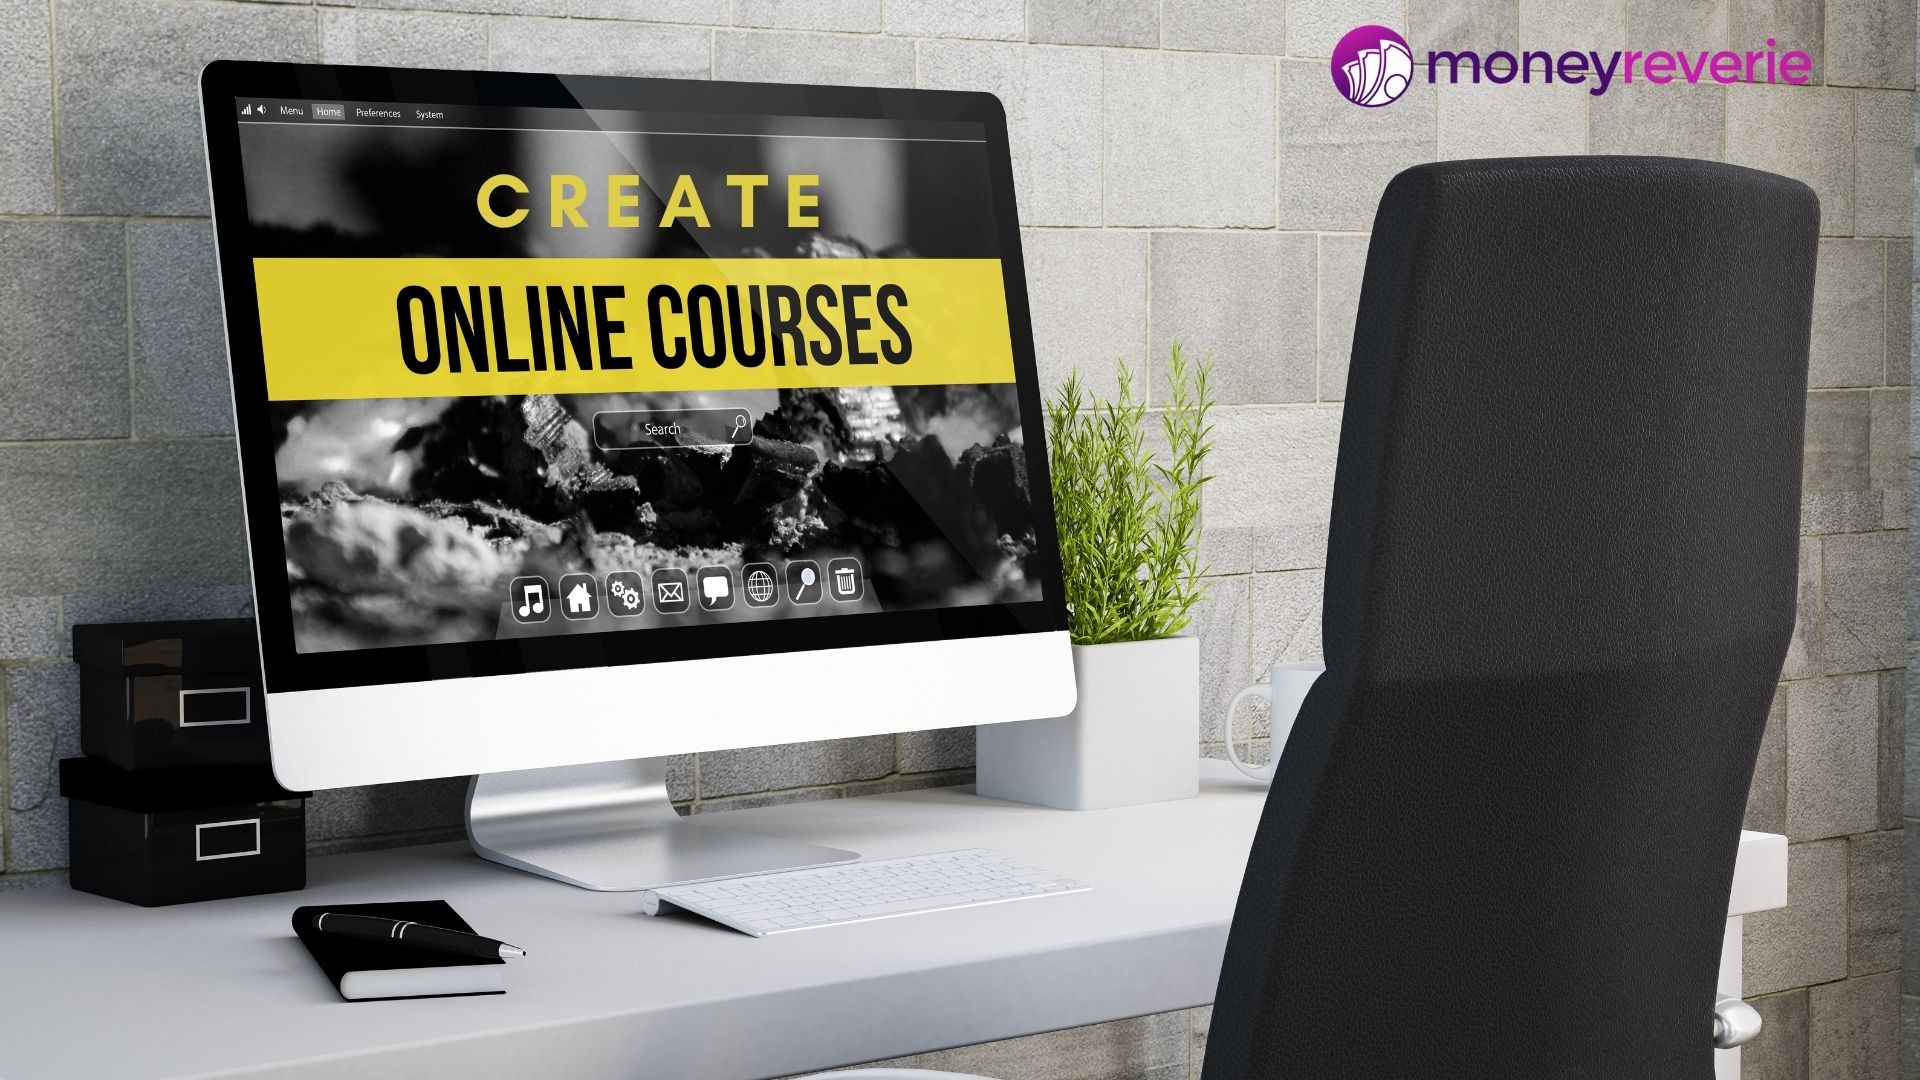 Create an Online Course